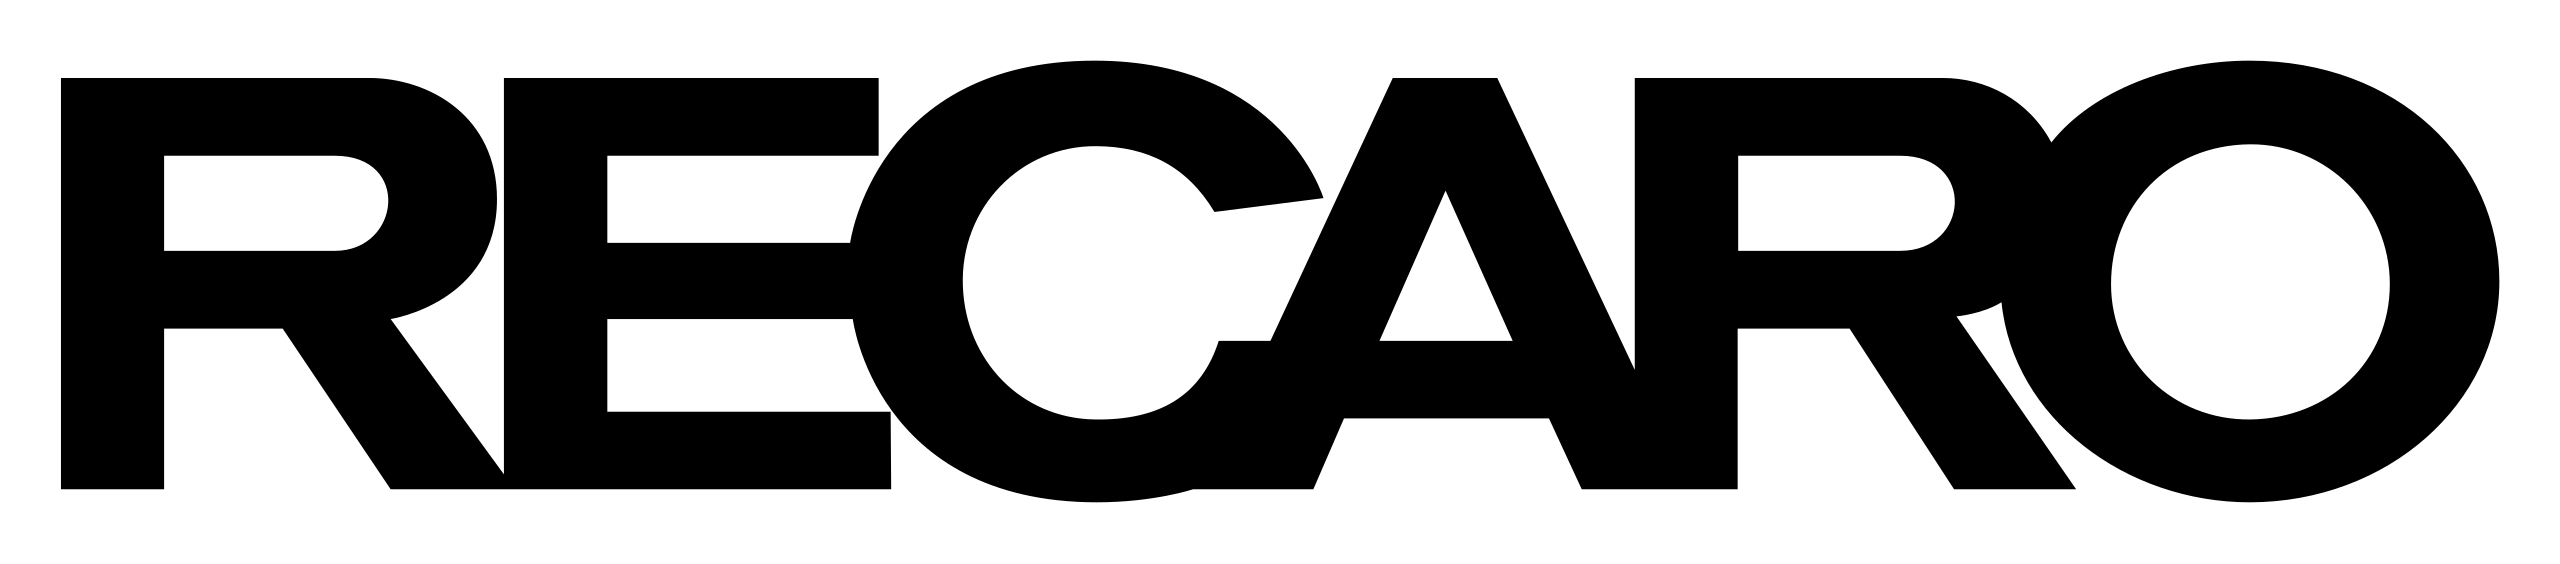 File:Recaro Logo.svg - Wikipedia